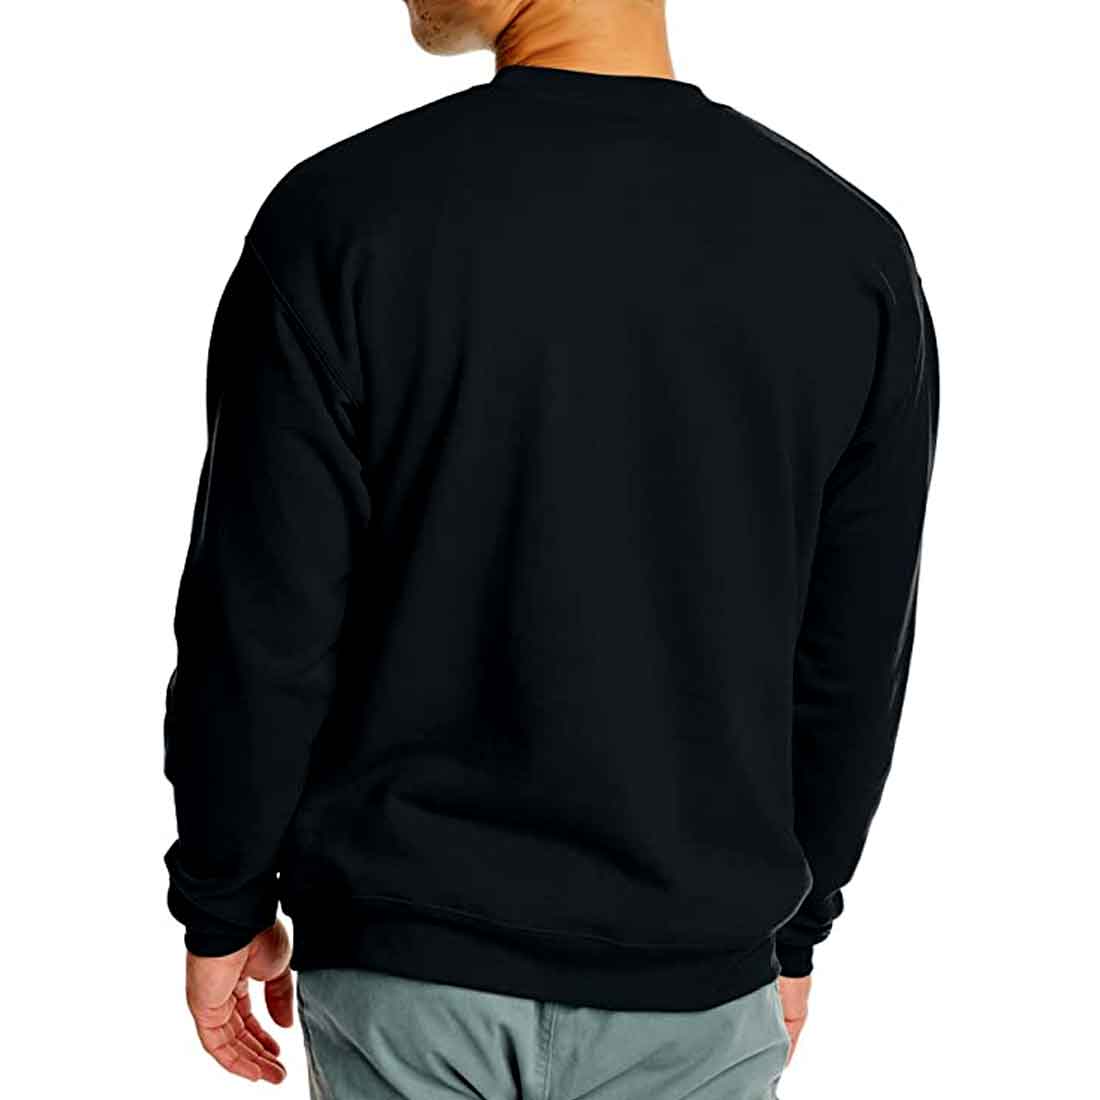 Black Cotton Sweatshirts Printed for Men Plus Size - Cancerian